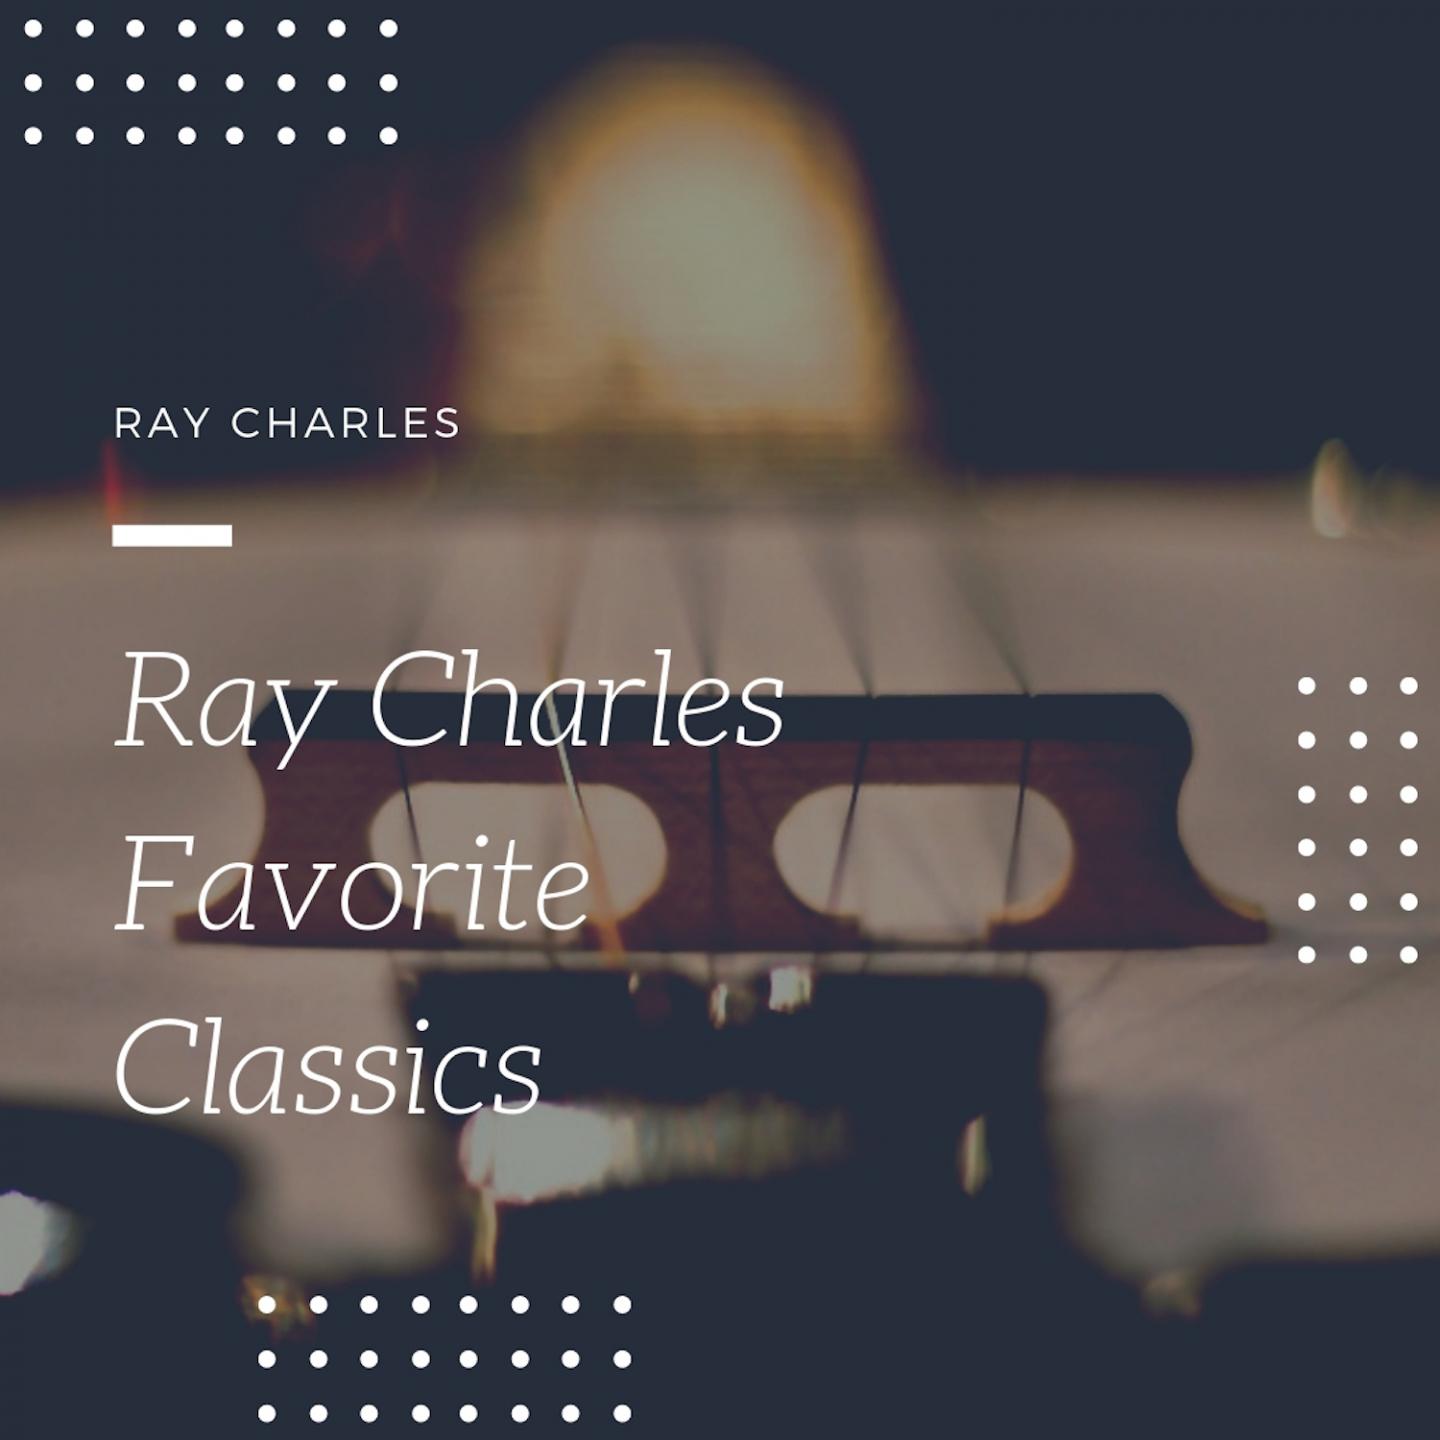 Ray Charles Favorite Classics